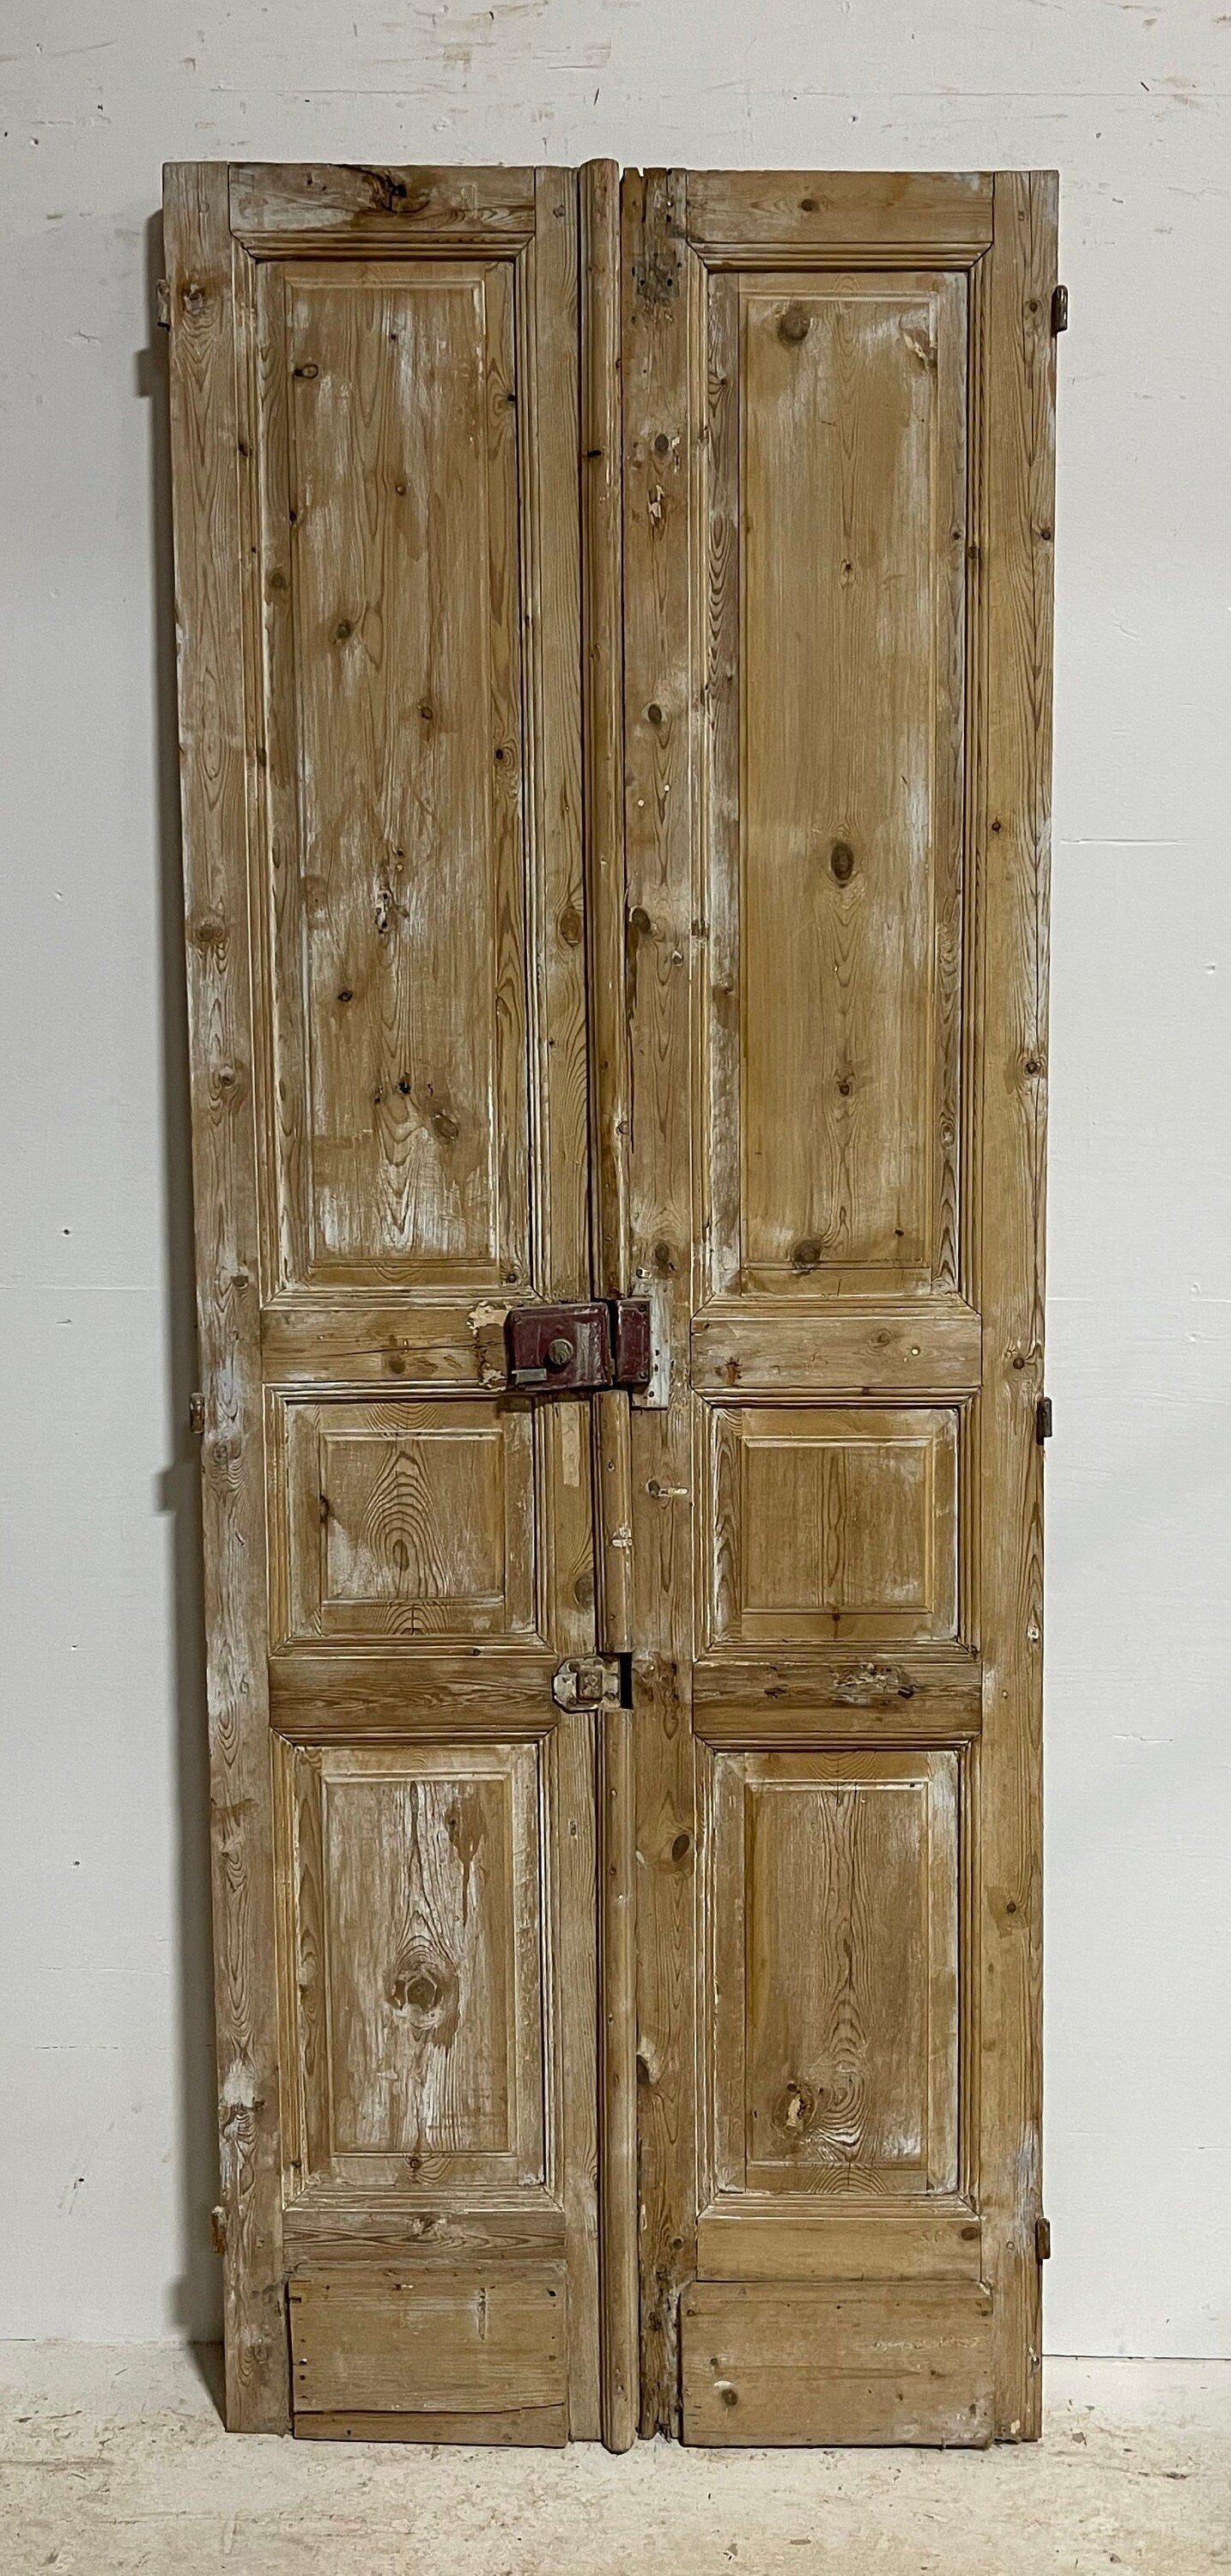 Antique French panel doors (92.5x34.5) H0035s